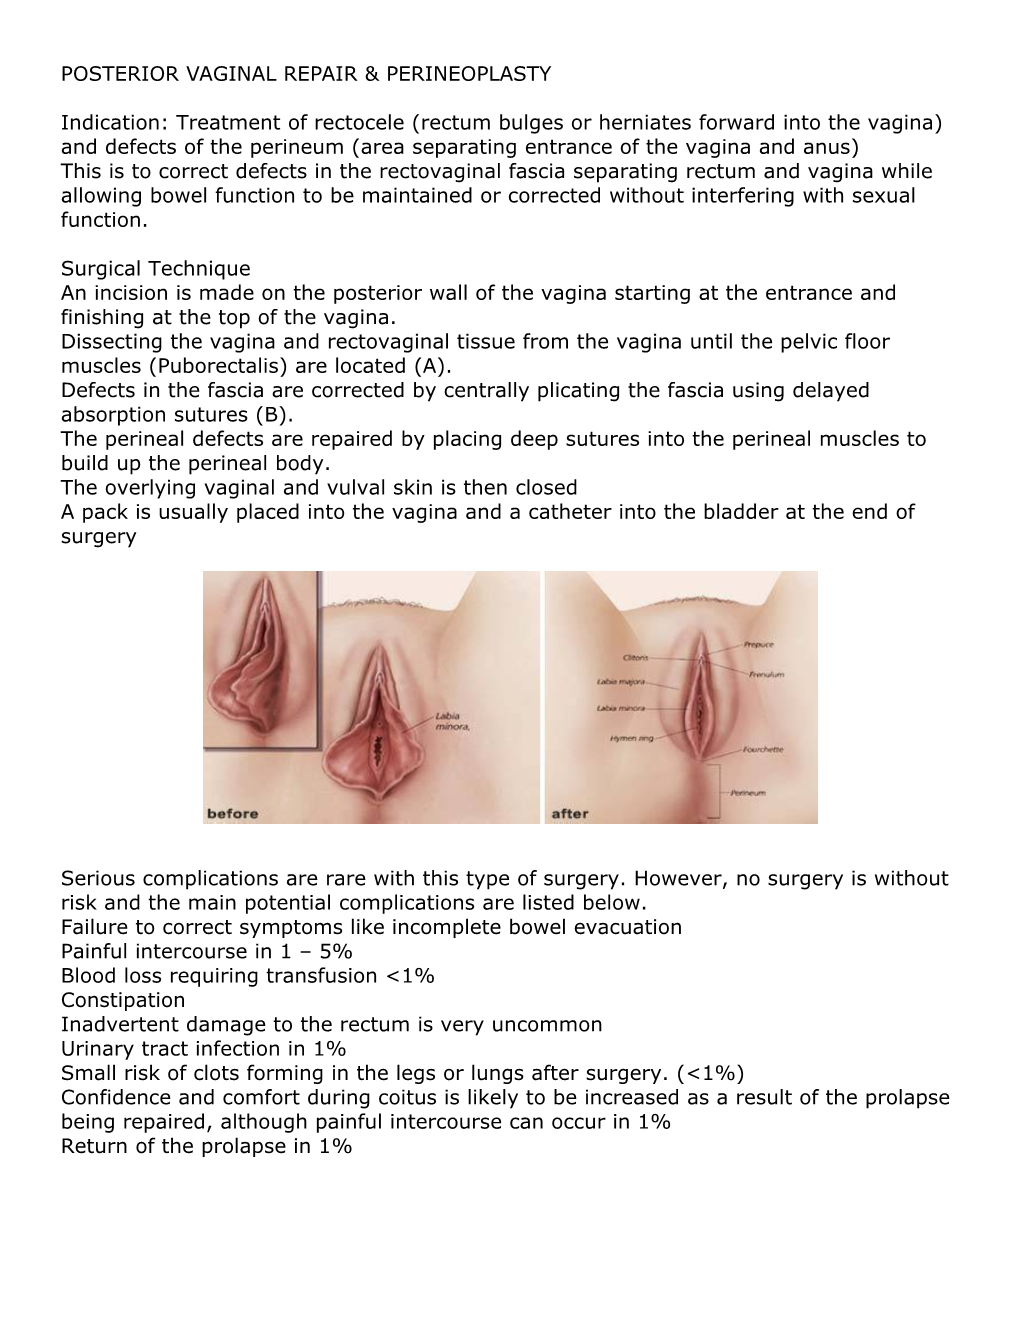 Posterior Vaginal Repair & Perineoplasty